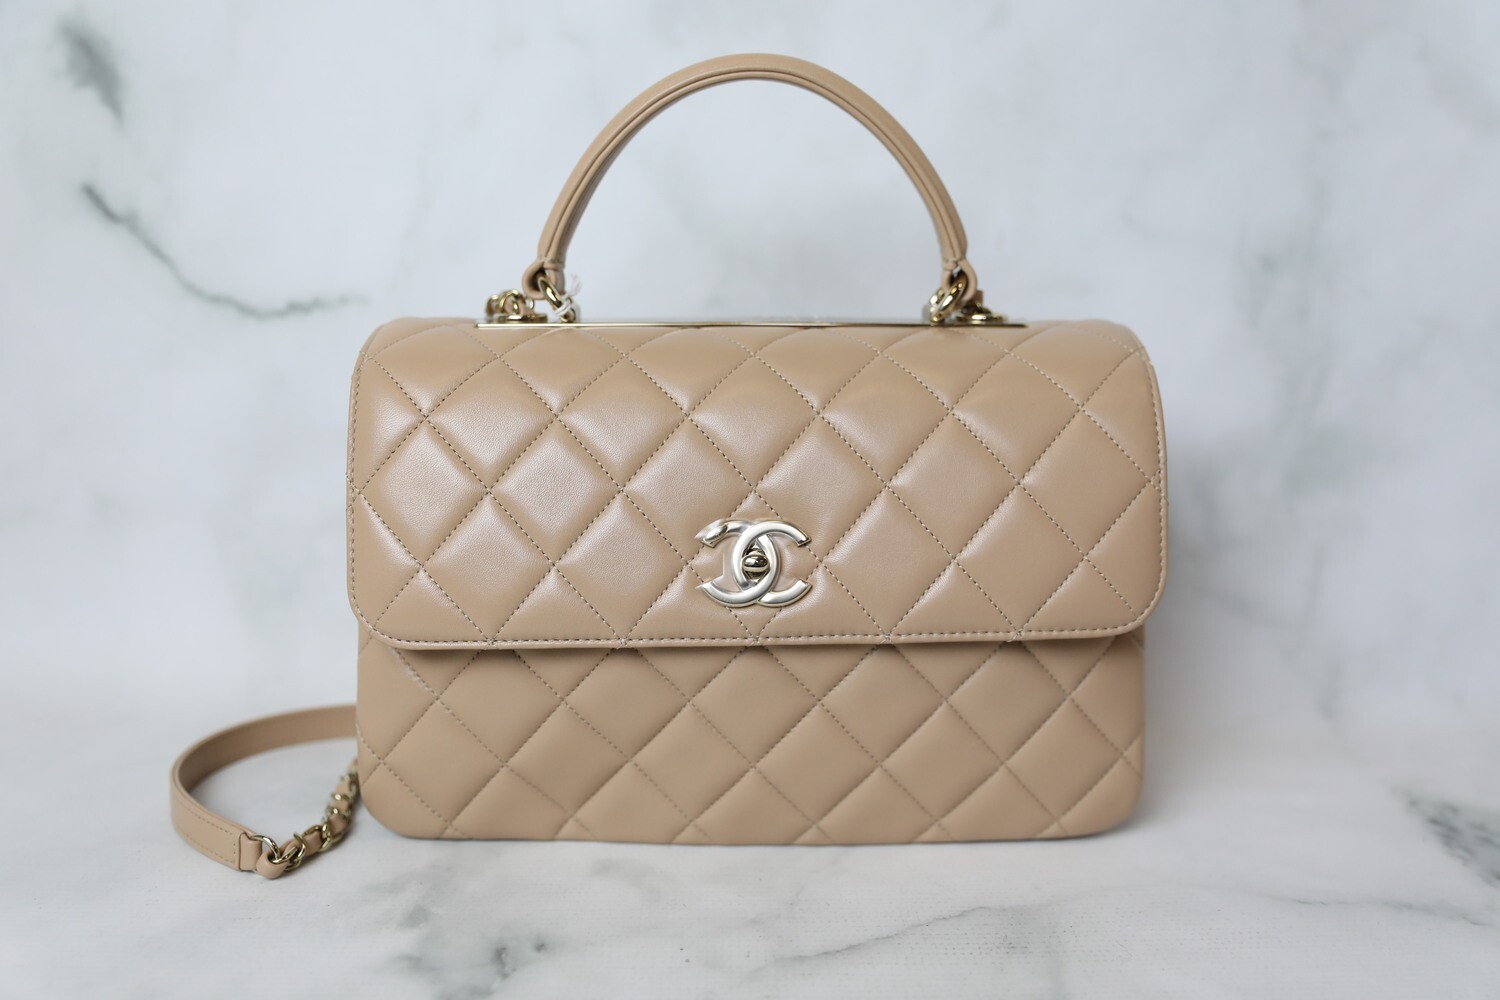 Chanel Trendy Medium, Beige Lambskin with Gold Hardware, New in